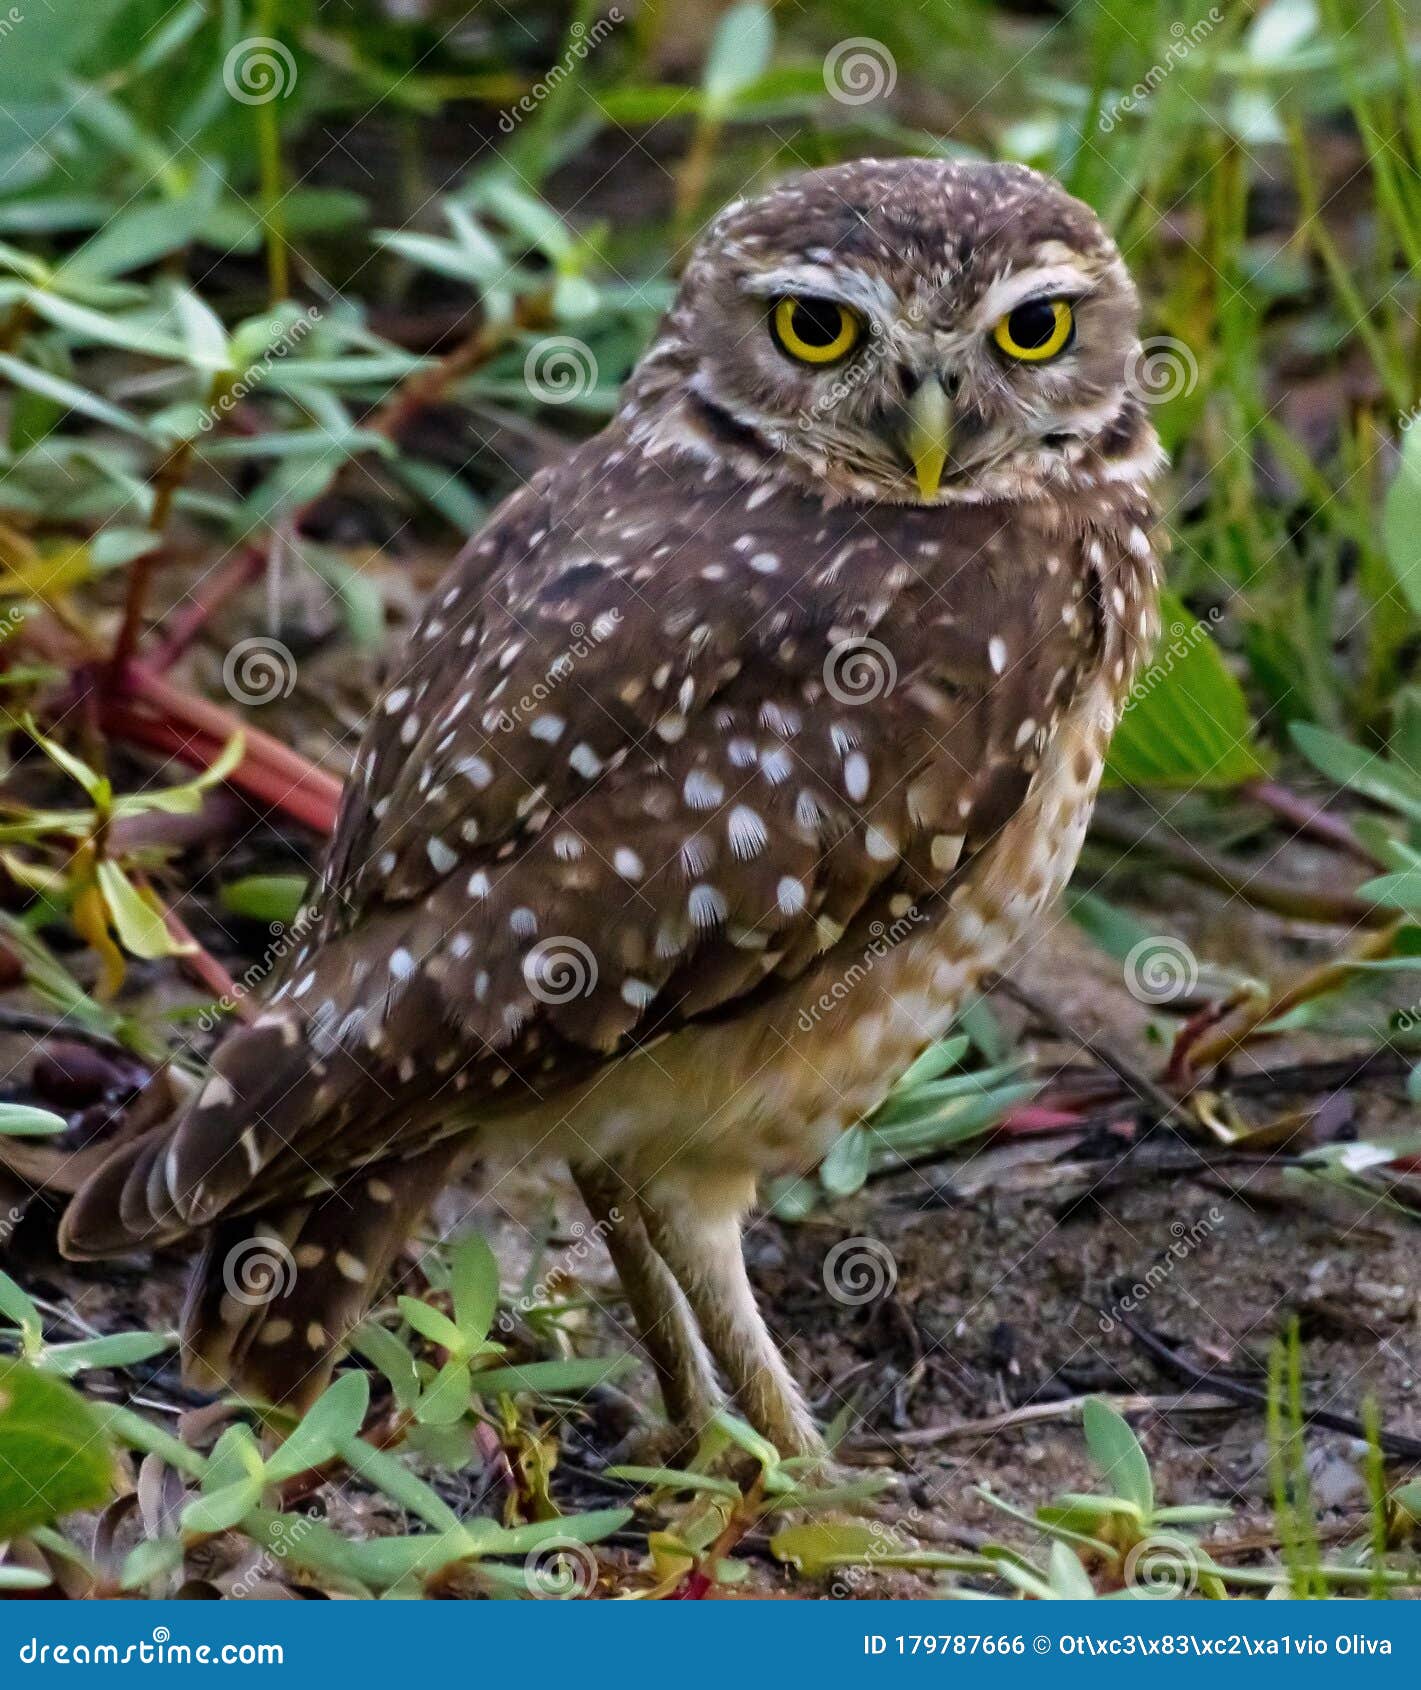 a burrowing owl, a wonderful bird of prey, before a green background.